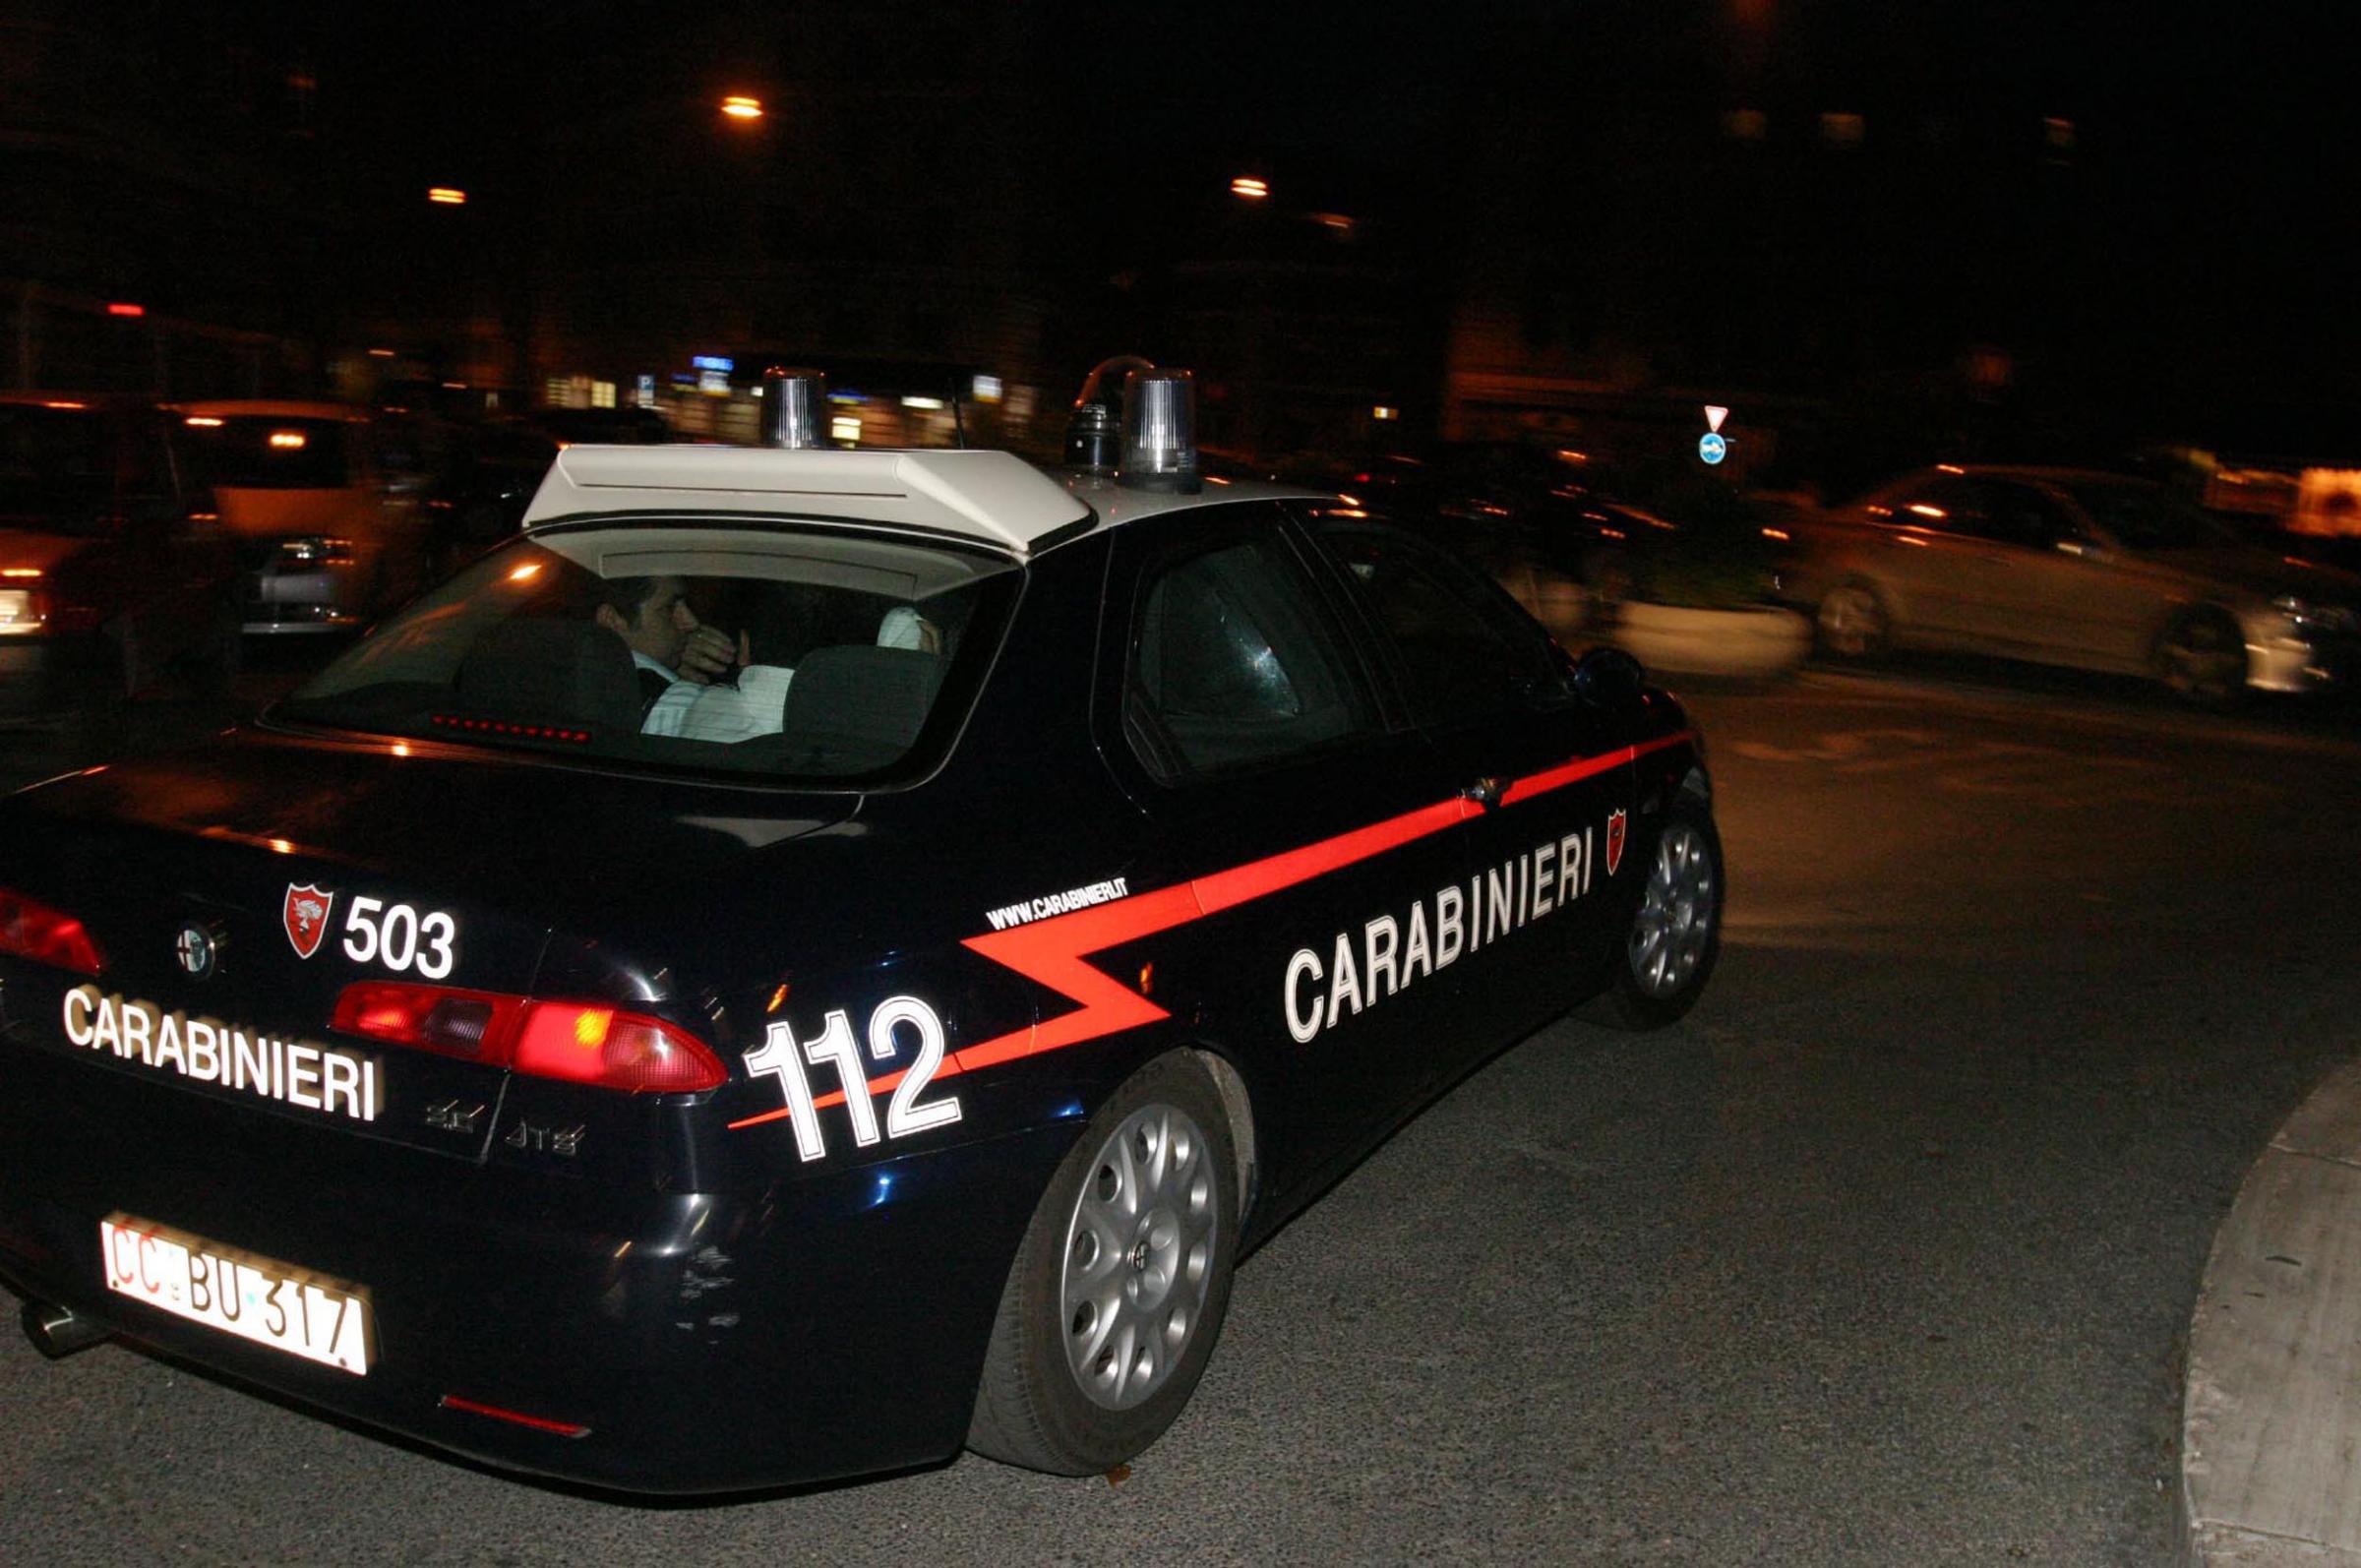  Vomero, carabinieri arrestano due persone per furto